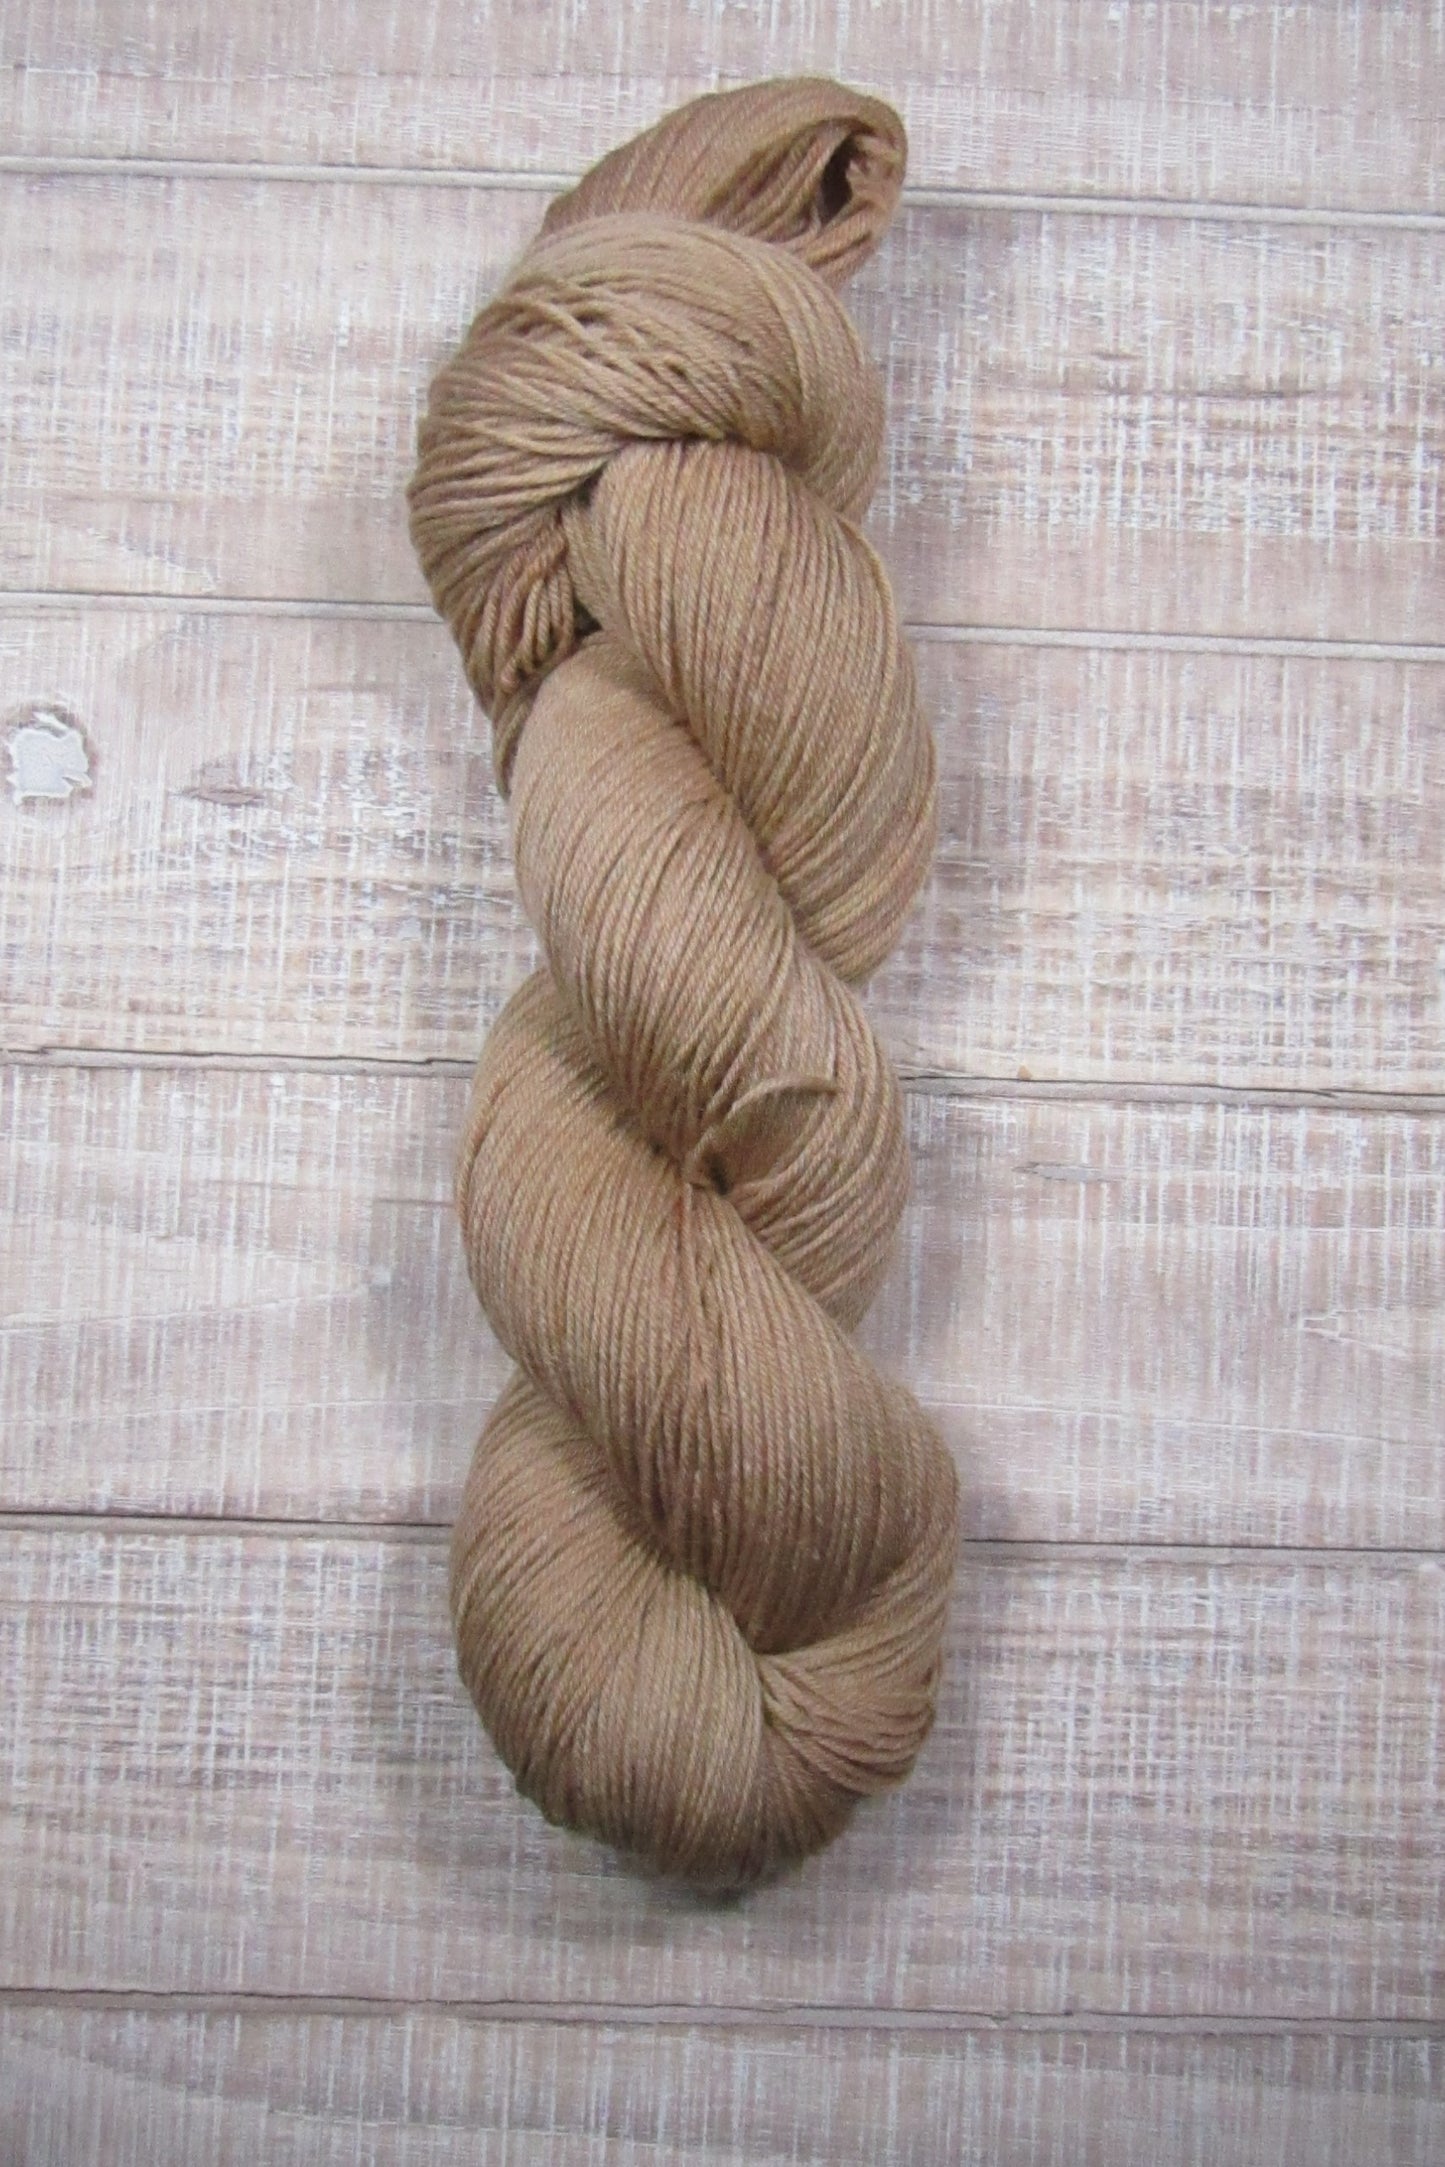 Hand-Dyed Yarn Buddy Superwash Merino/Nylon fingering weight yarn in a solid shade of brown.